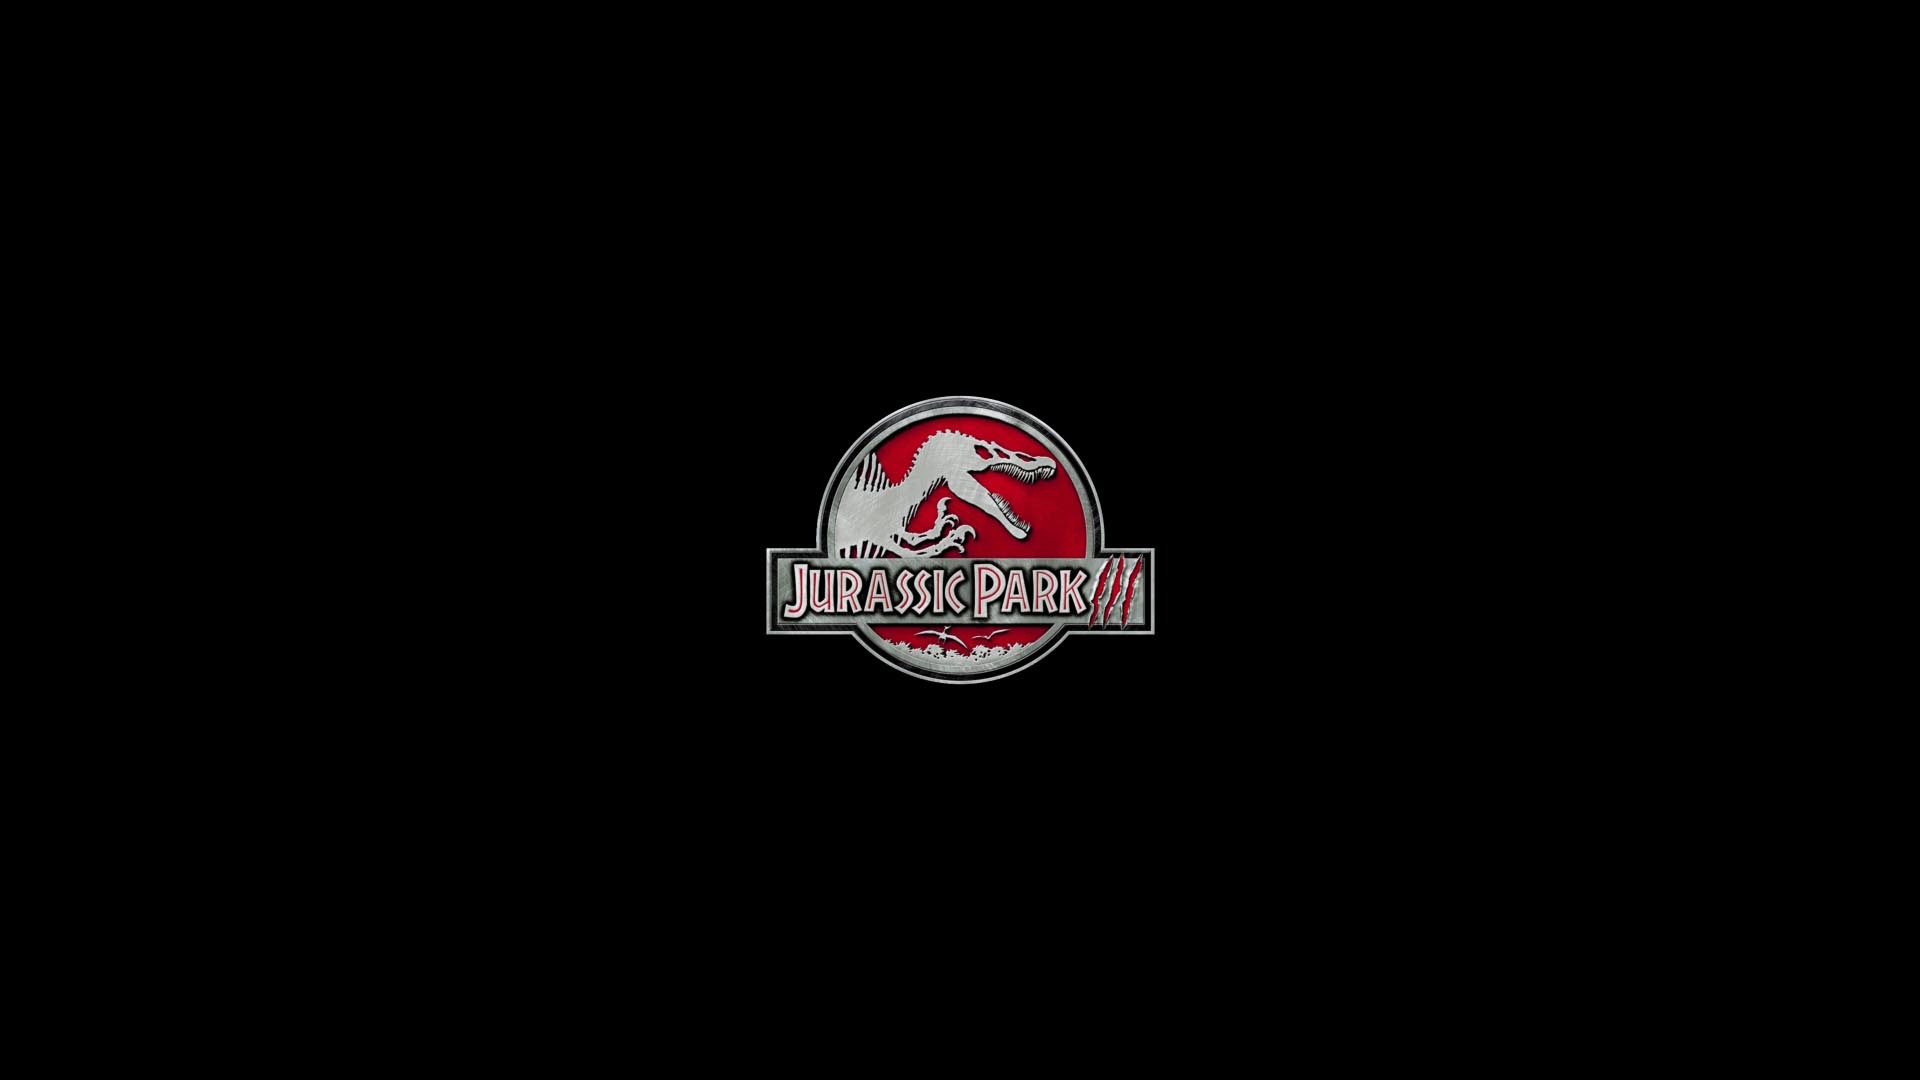 Télécharger des fonds d'écran Jurassic Park Iii HD